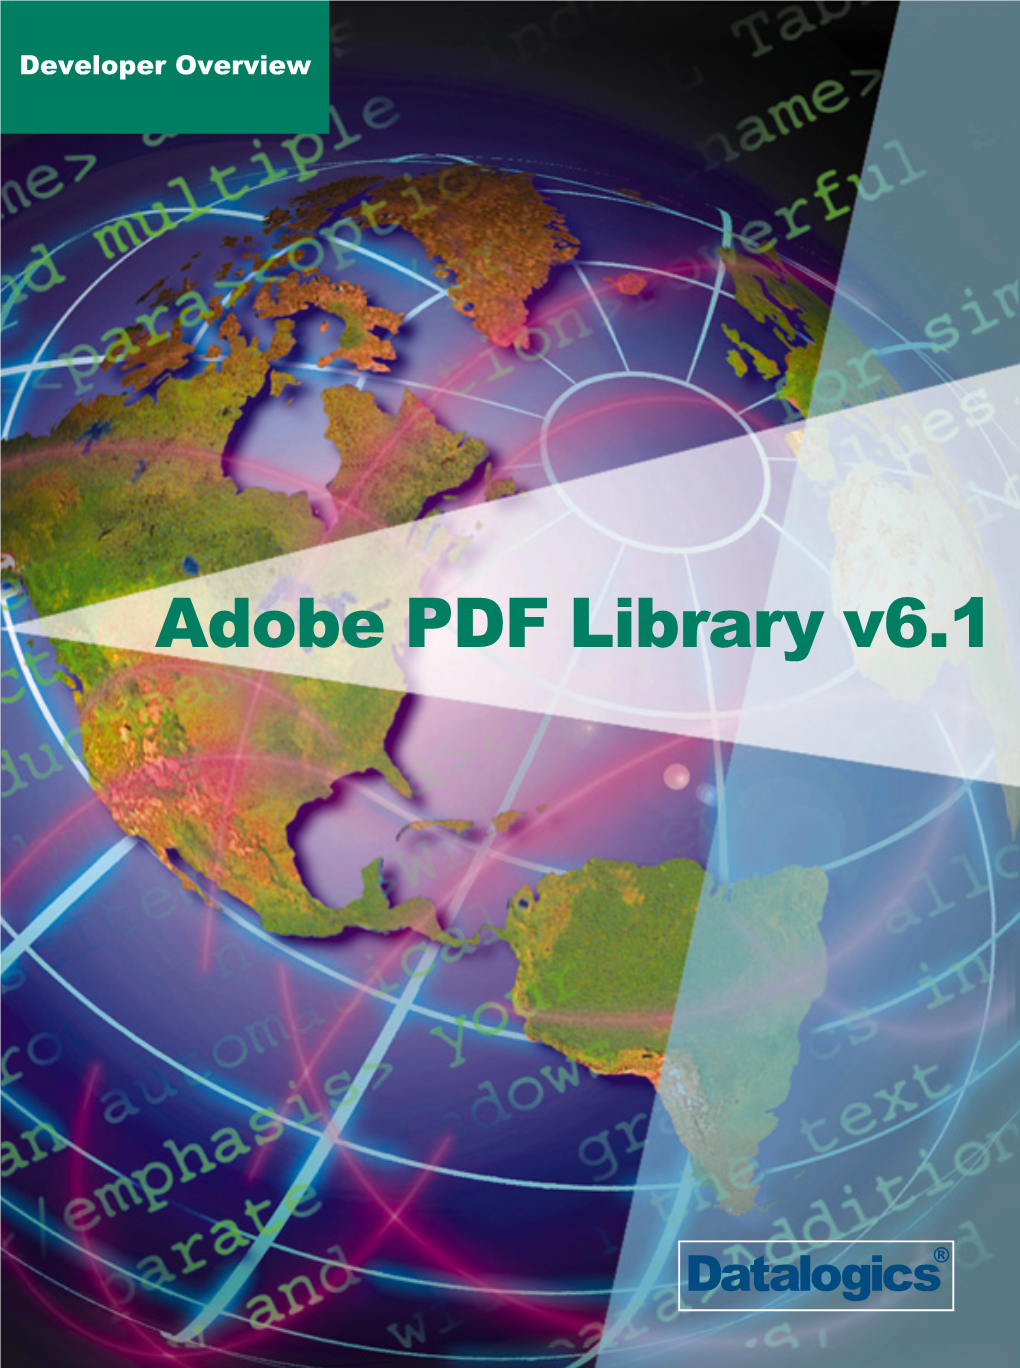 Adobe PDF Library Developer Overview